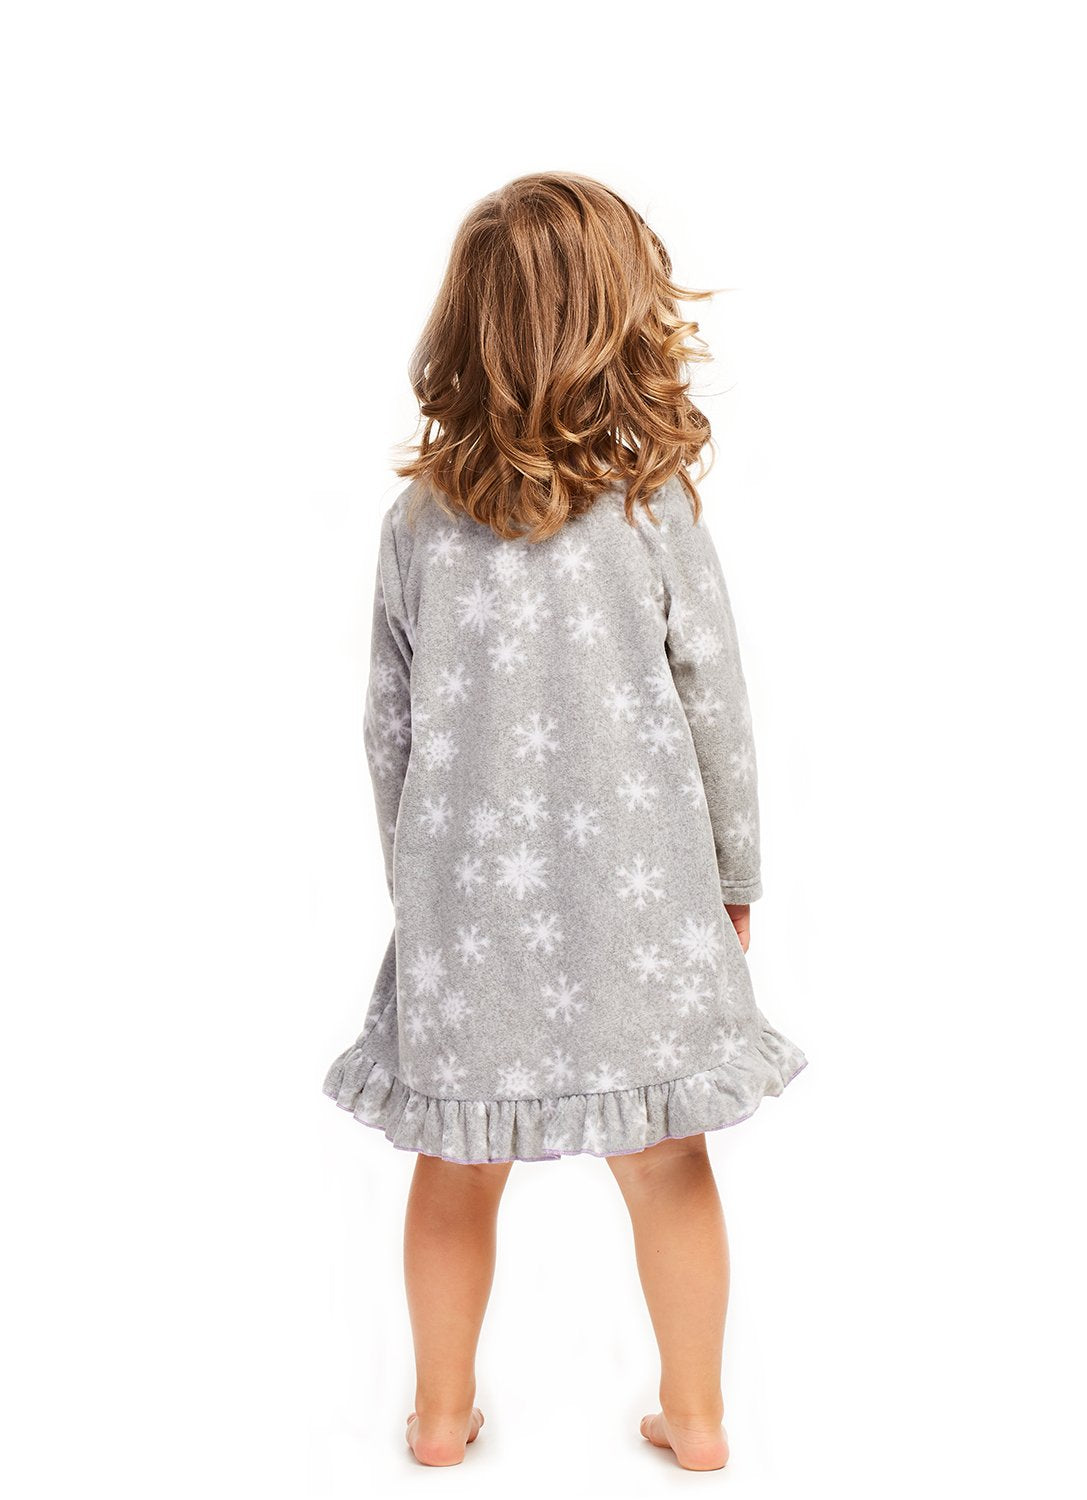 Back view Little Girl wearing Frozen 2 Gray Sleep Gown